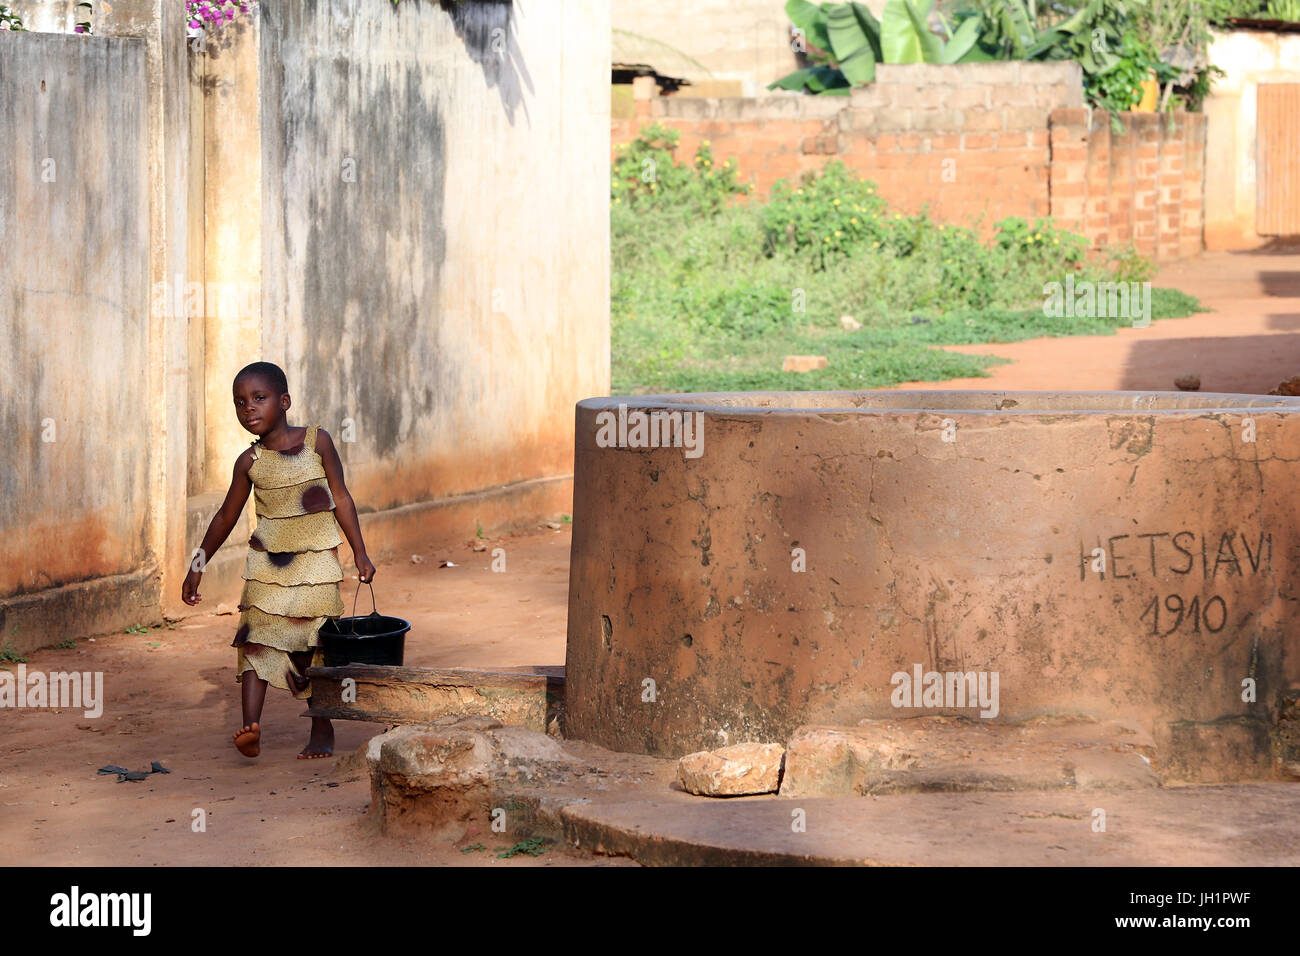 La vida del pueblo africano. Chica con agua cerca de un pozo. Togoville. Togo. Foto de stock